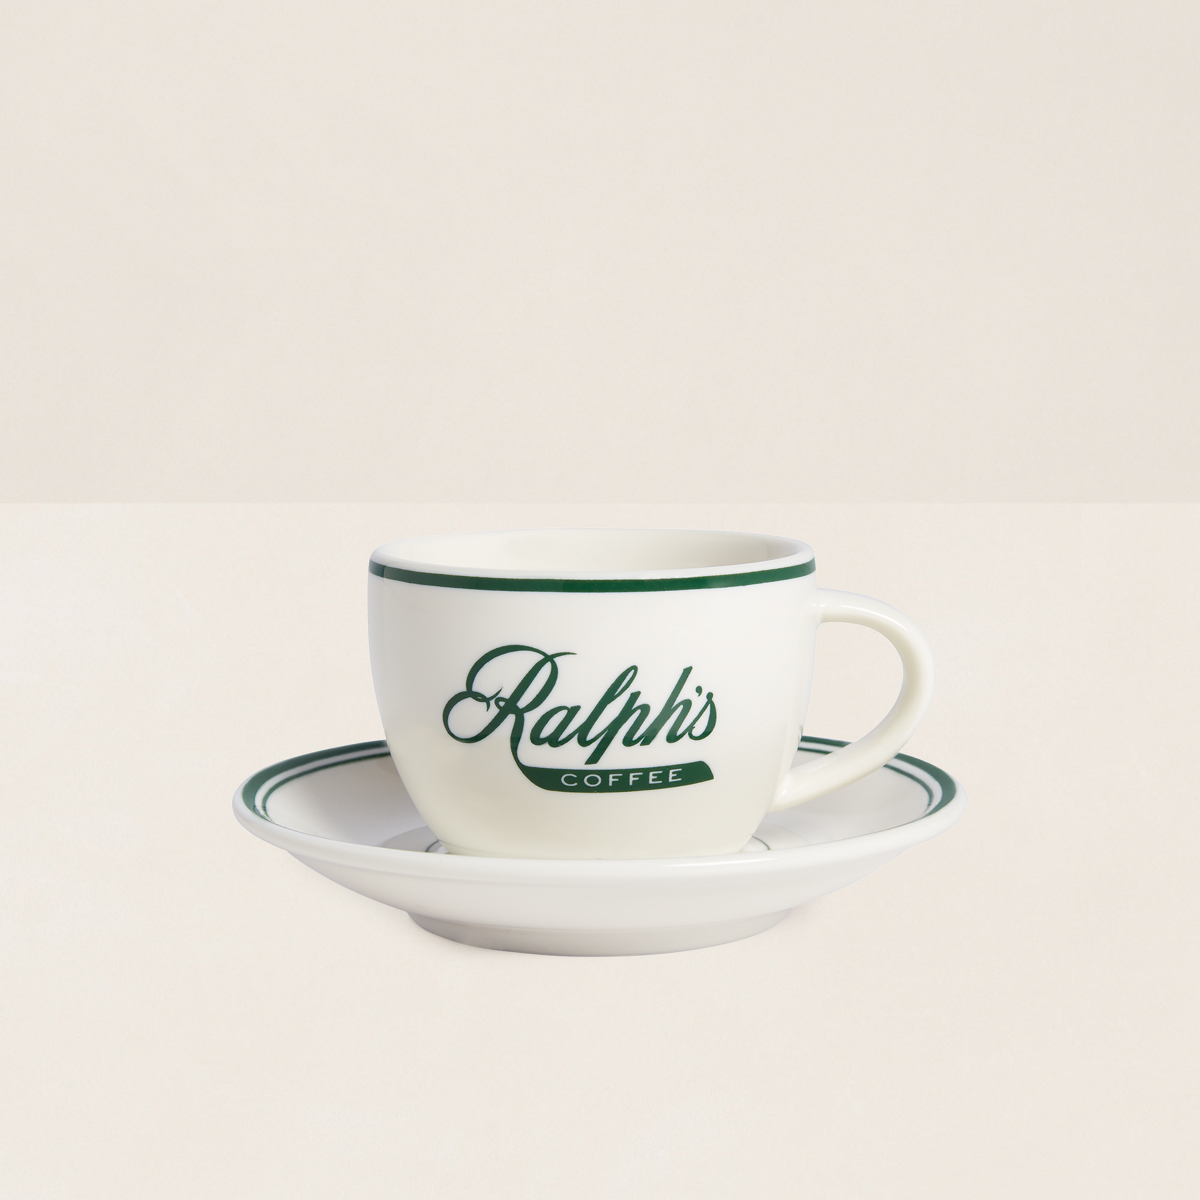 Ralph's Coffee Espresso Cup & Saucer